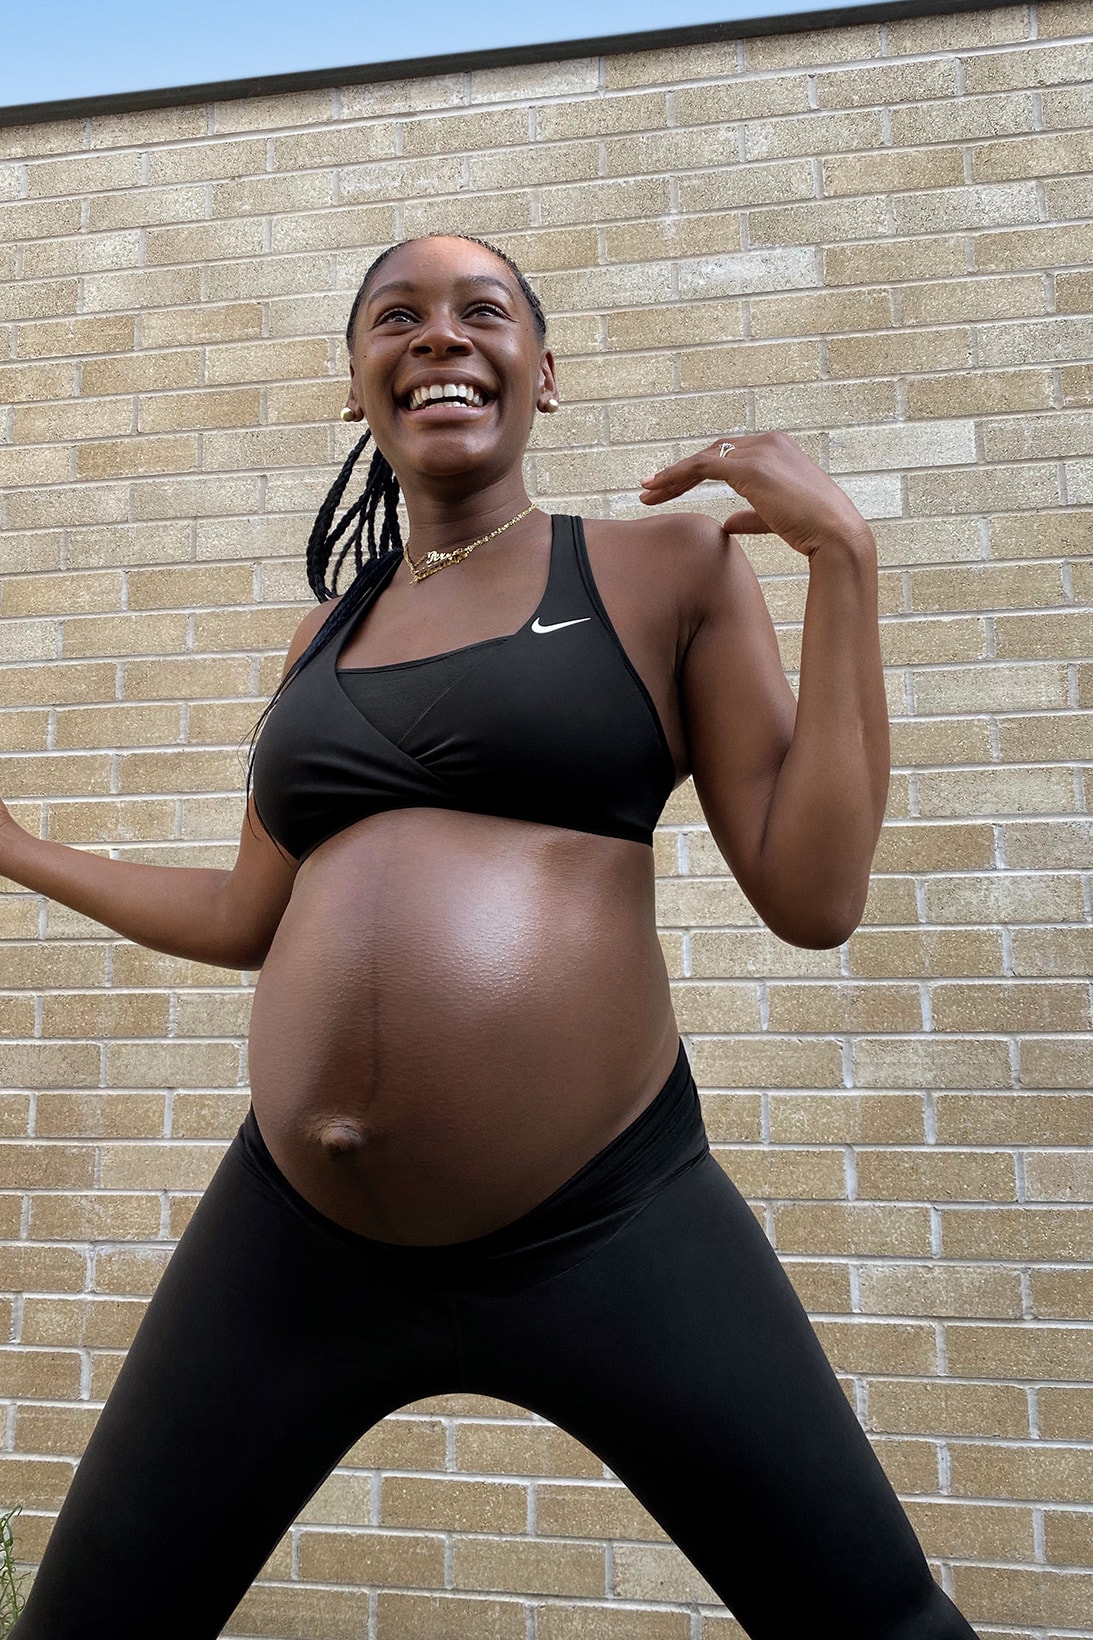 nike m maternity wear launch pregnant mothers moms postpartum inclusivity diversity bras tank tops leggings tights